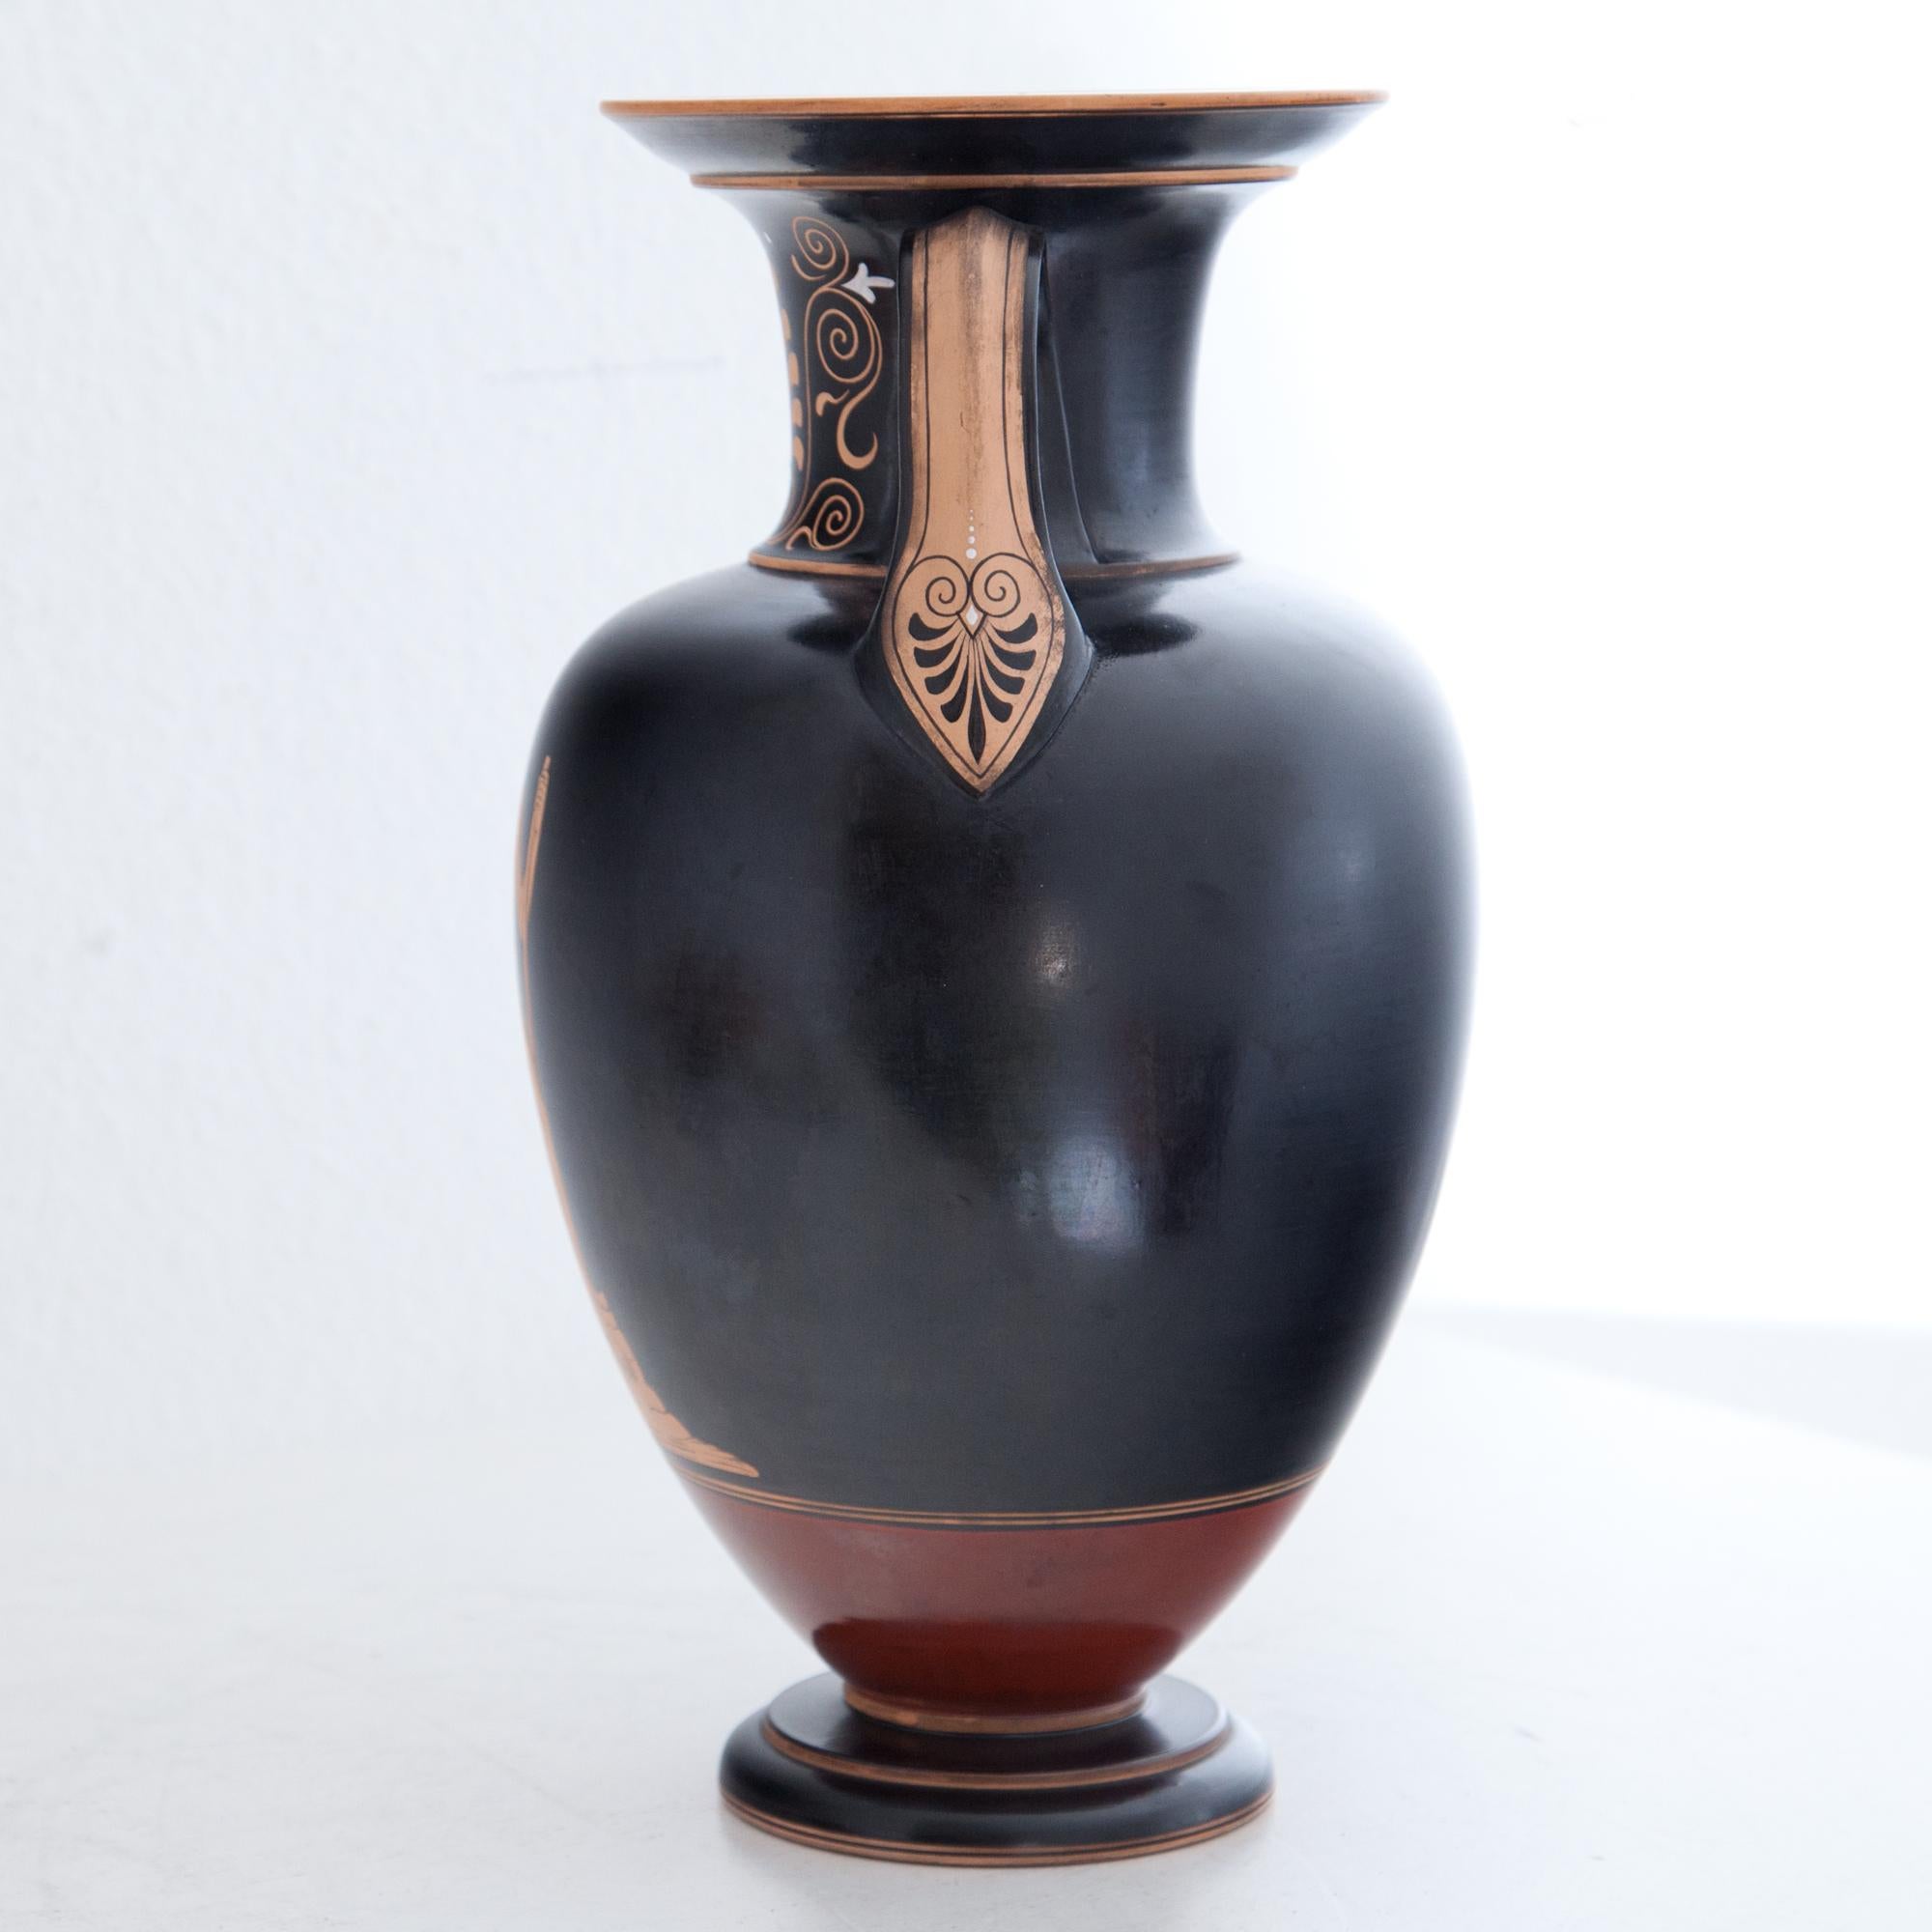 Ceramic Amphora by L. Hjorth, Ronne circa 1870